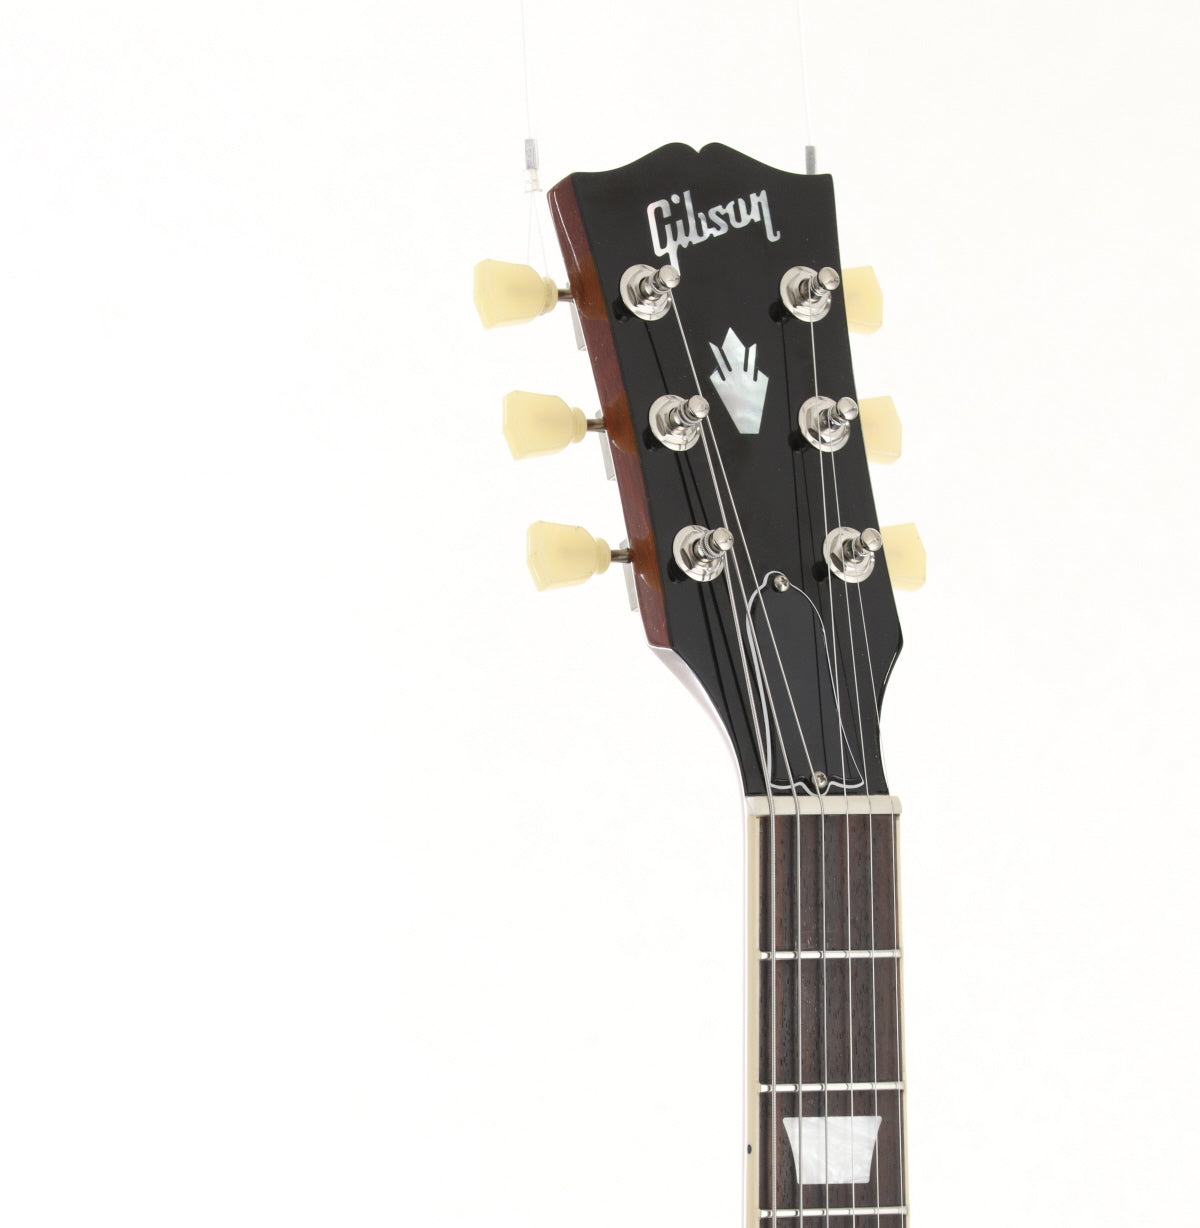 [SN 232520223] USED Gibson Usa / SG Standard 61 Vintage Cherry [03]